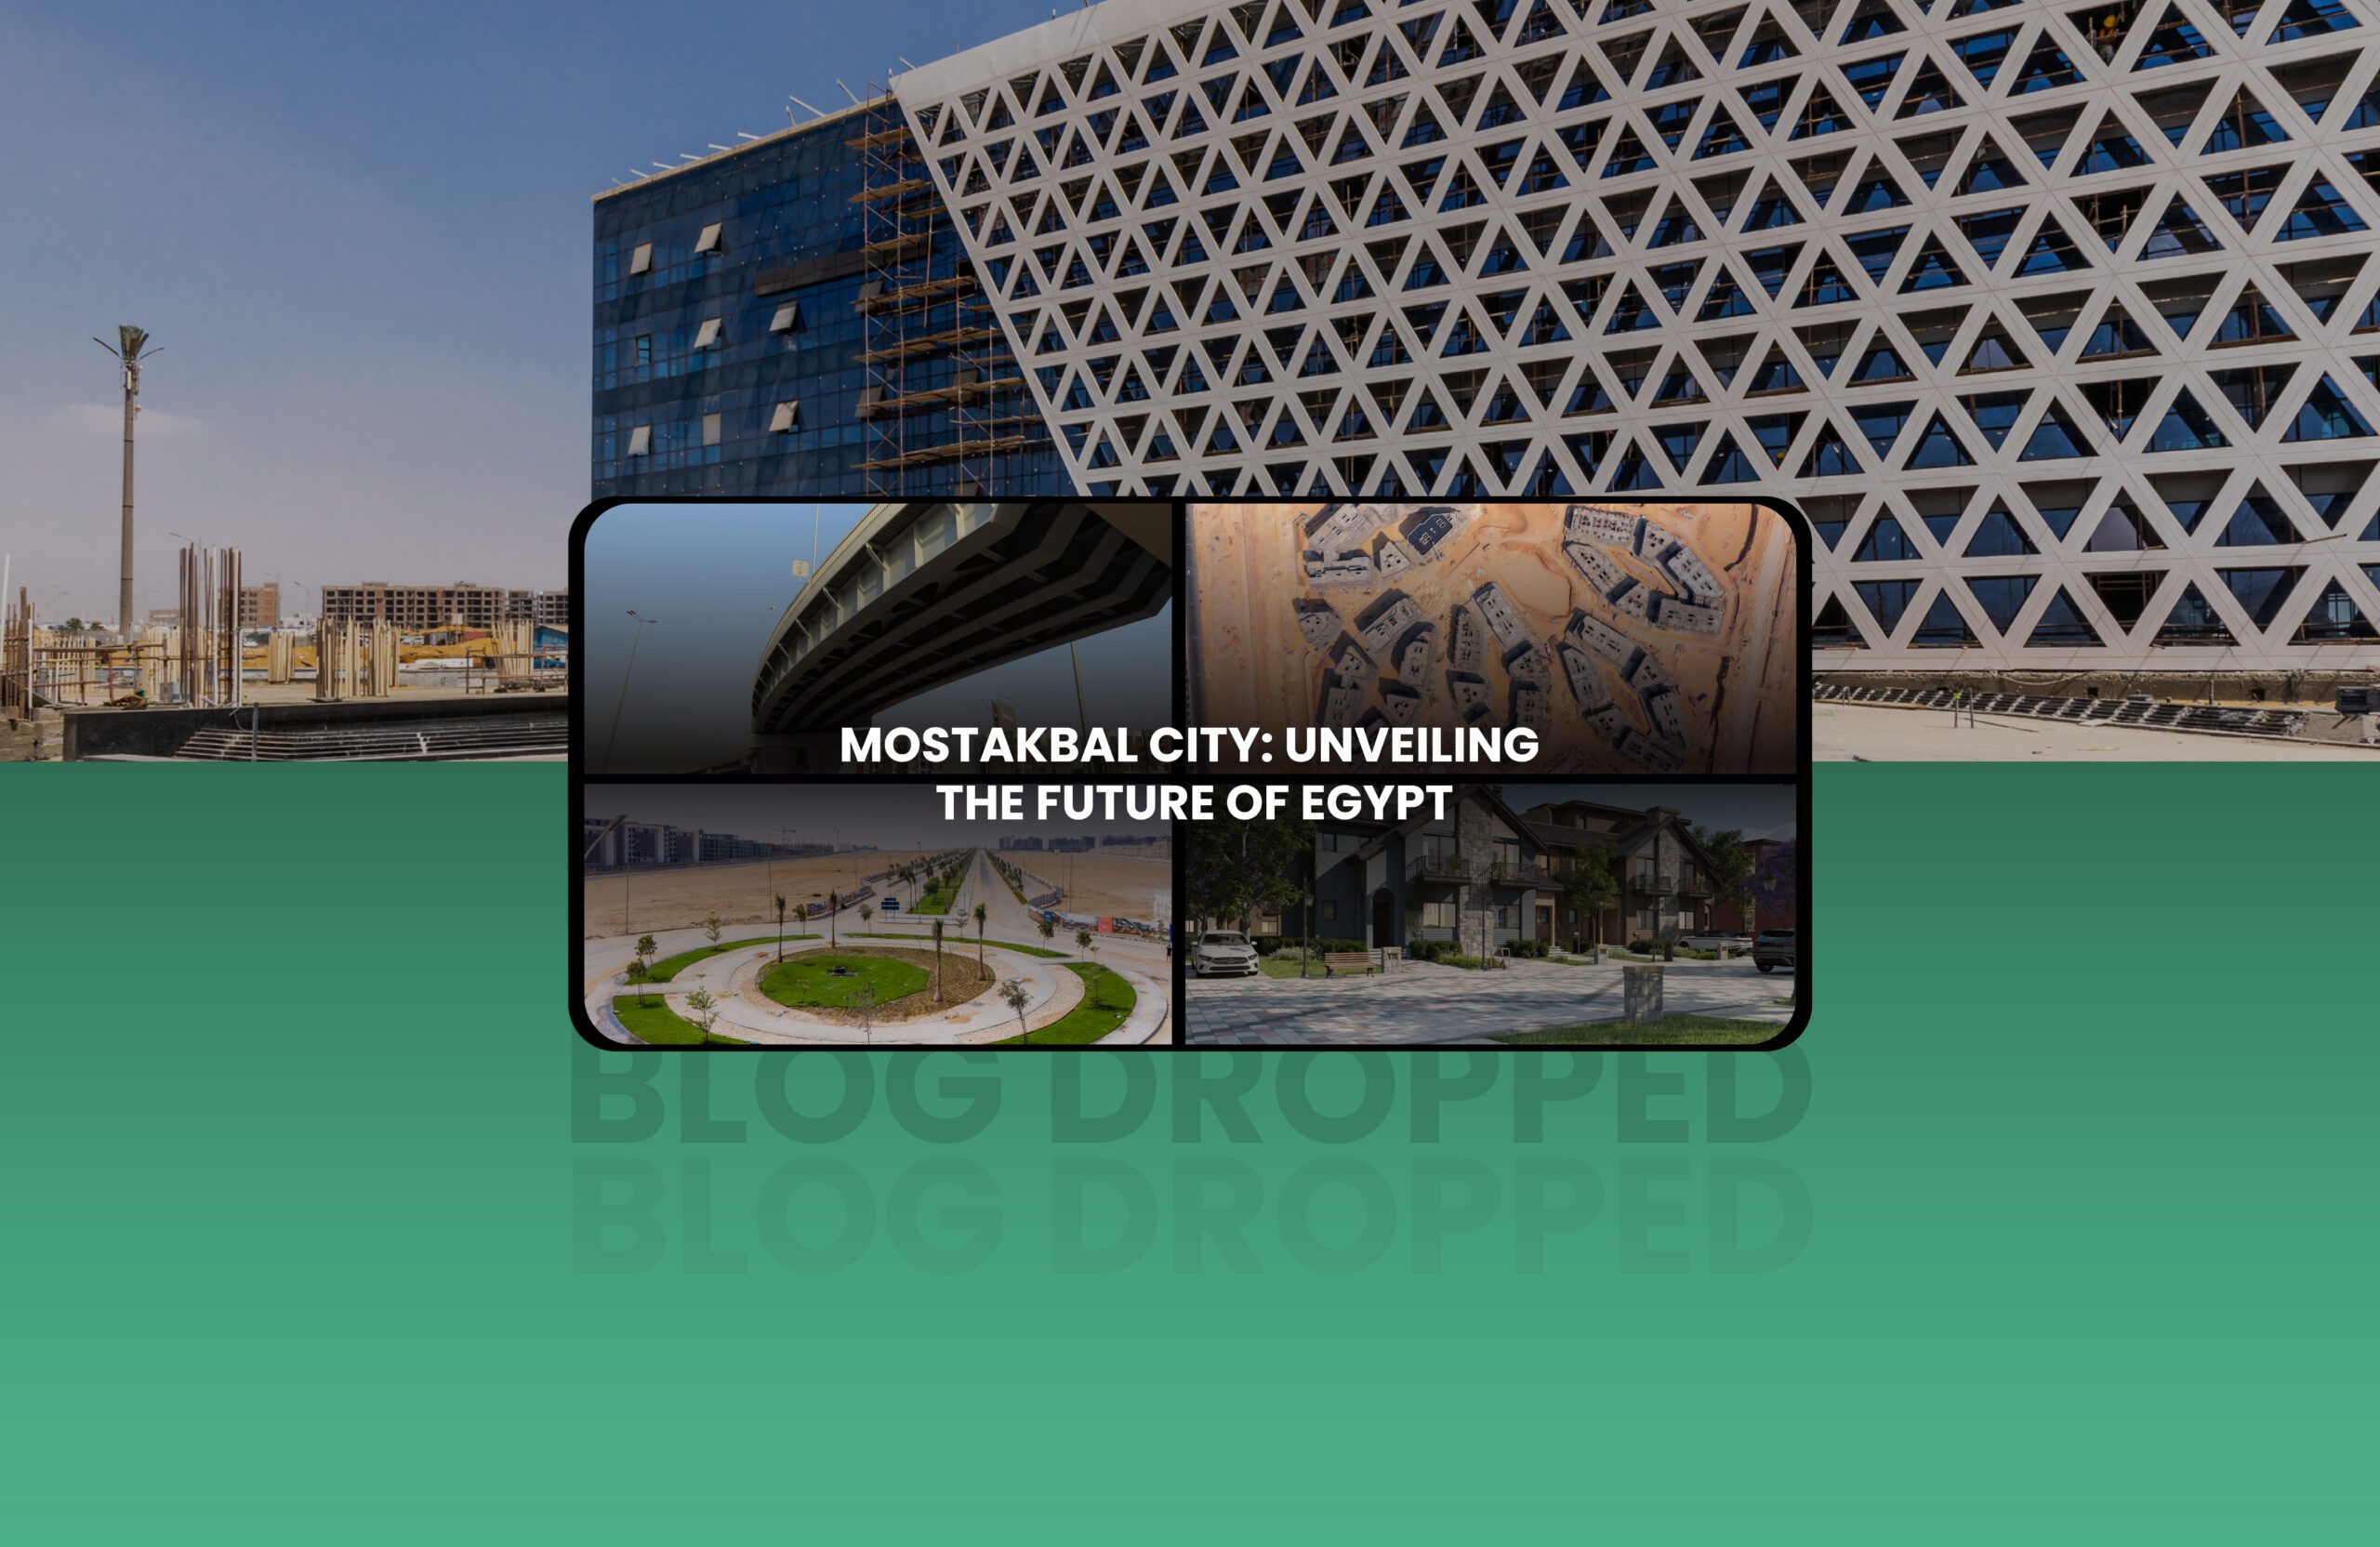 mostakal city update blog on estatebook